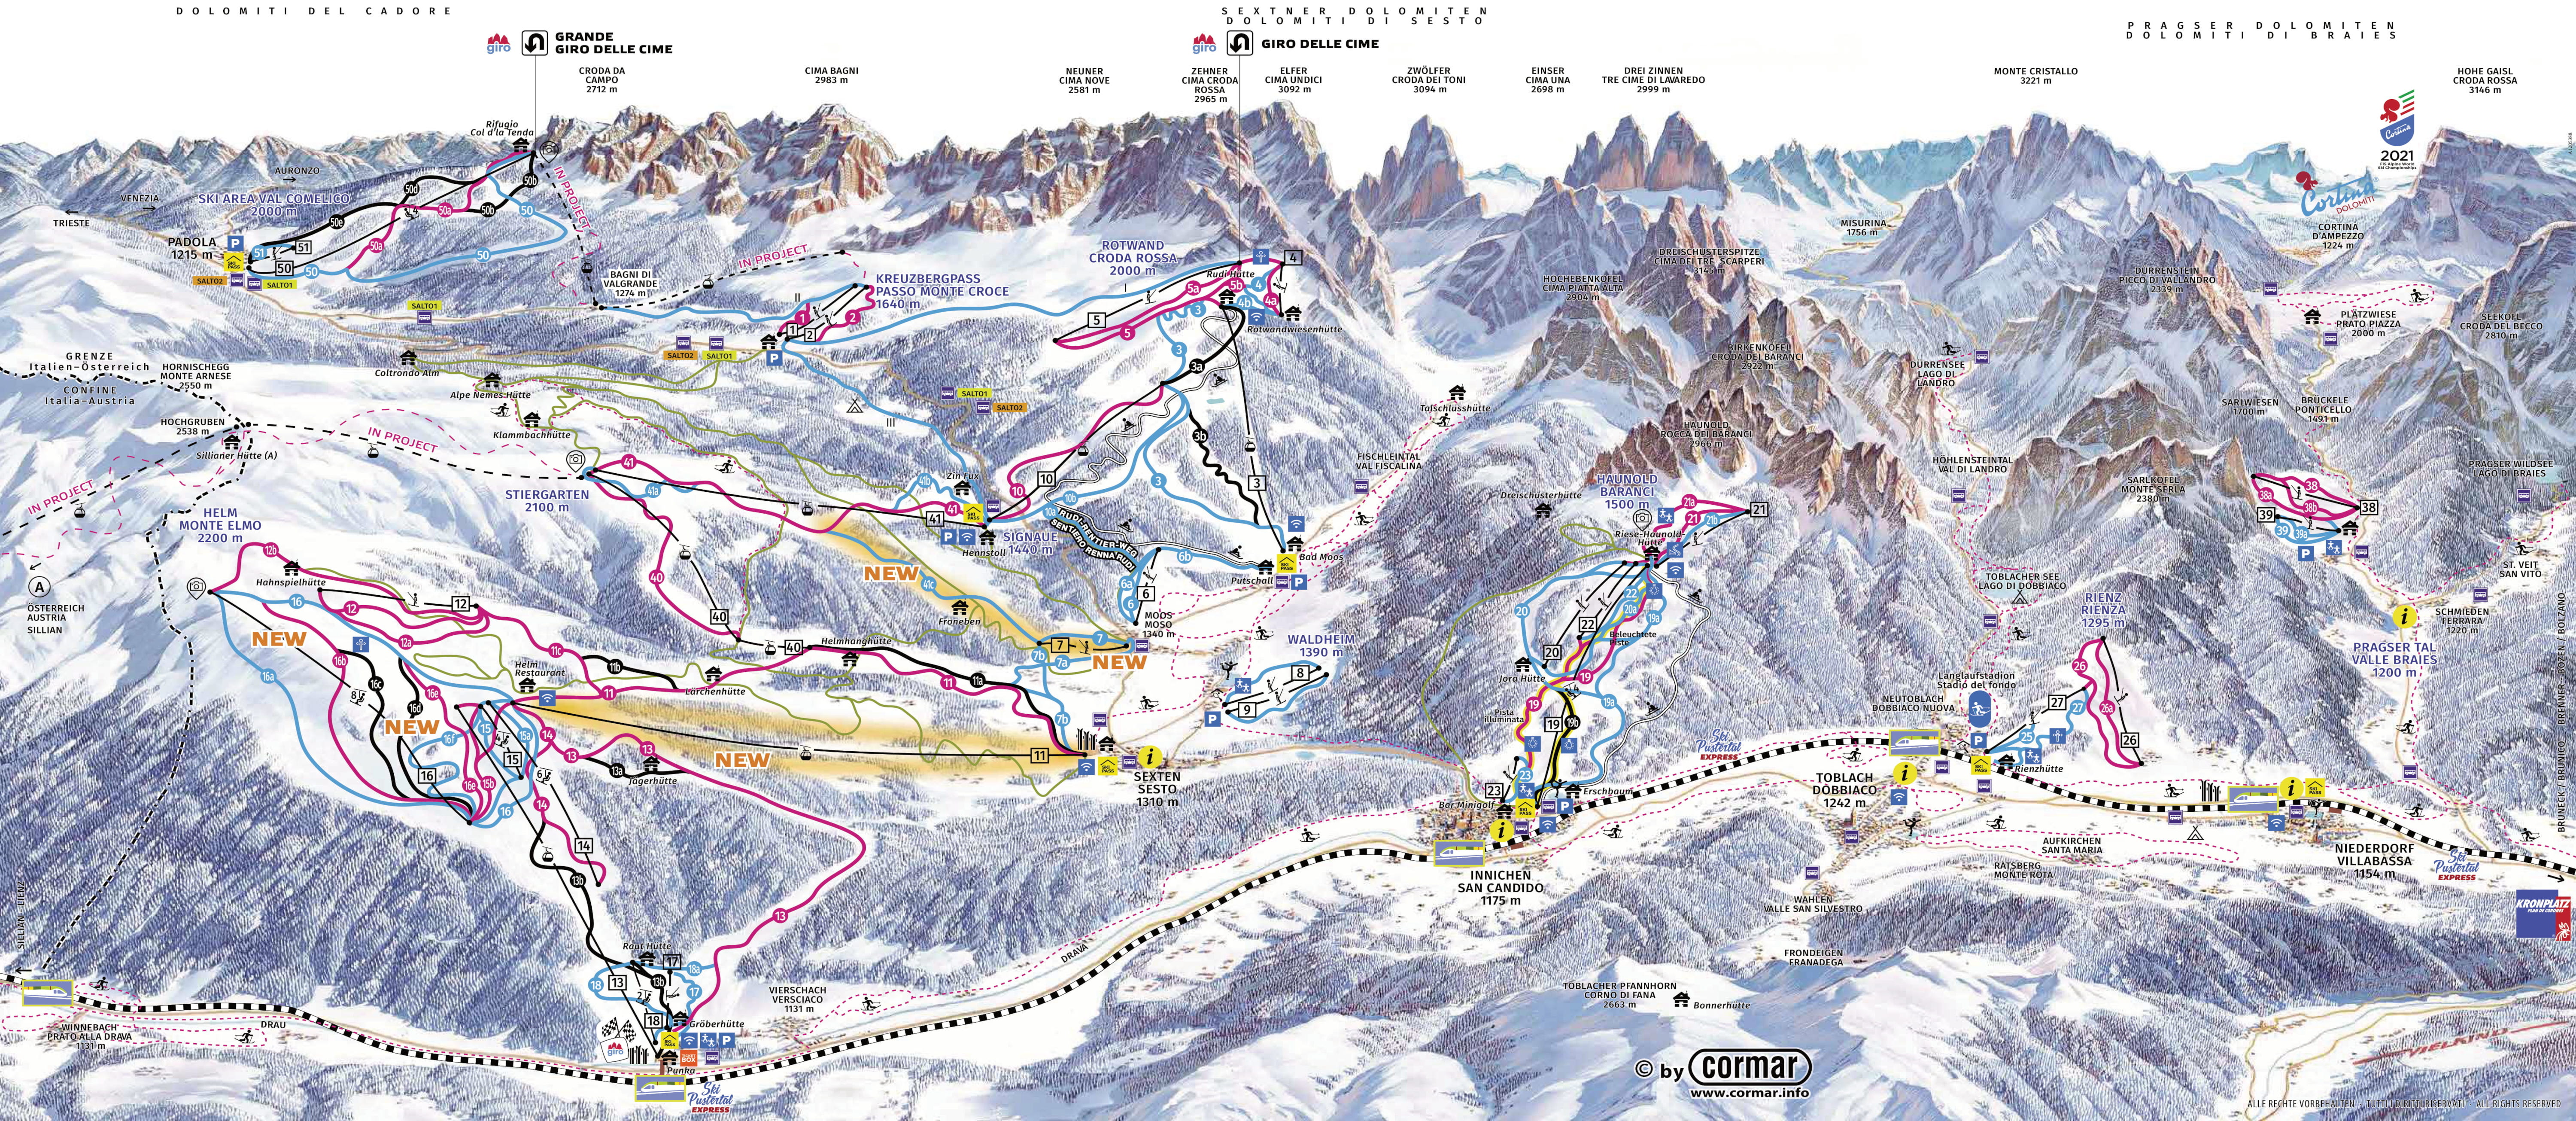 - Ski Resort Helm - Monte Elmo - 3 Zinnen Dolomiten - ski area closed